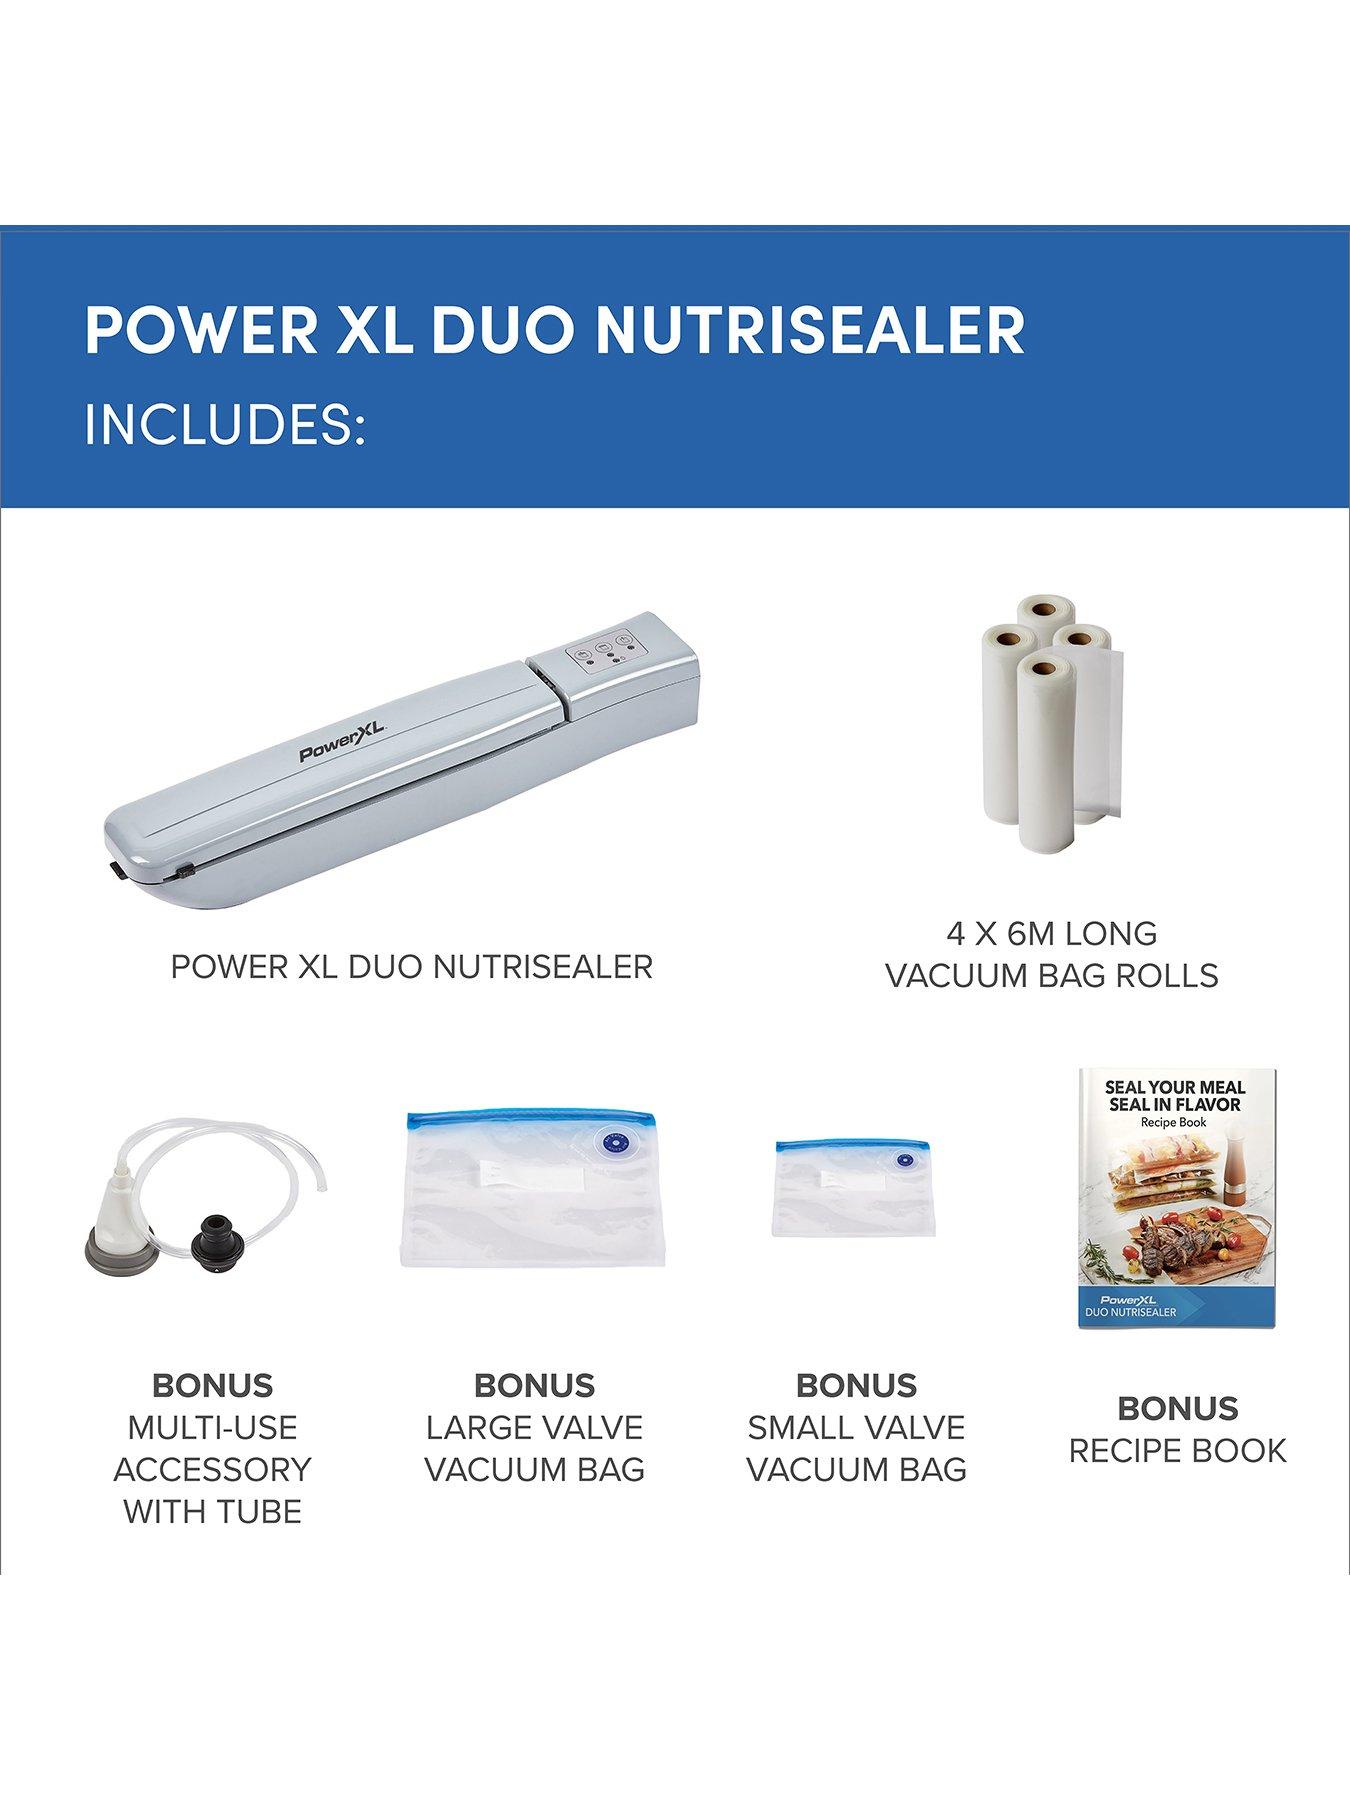 Does It Really Work: PowerXL Duo NutriSealer 